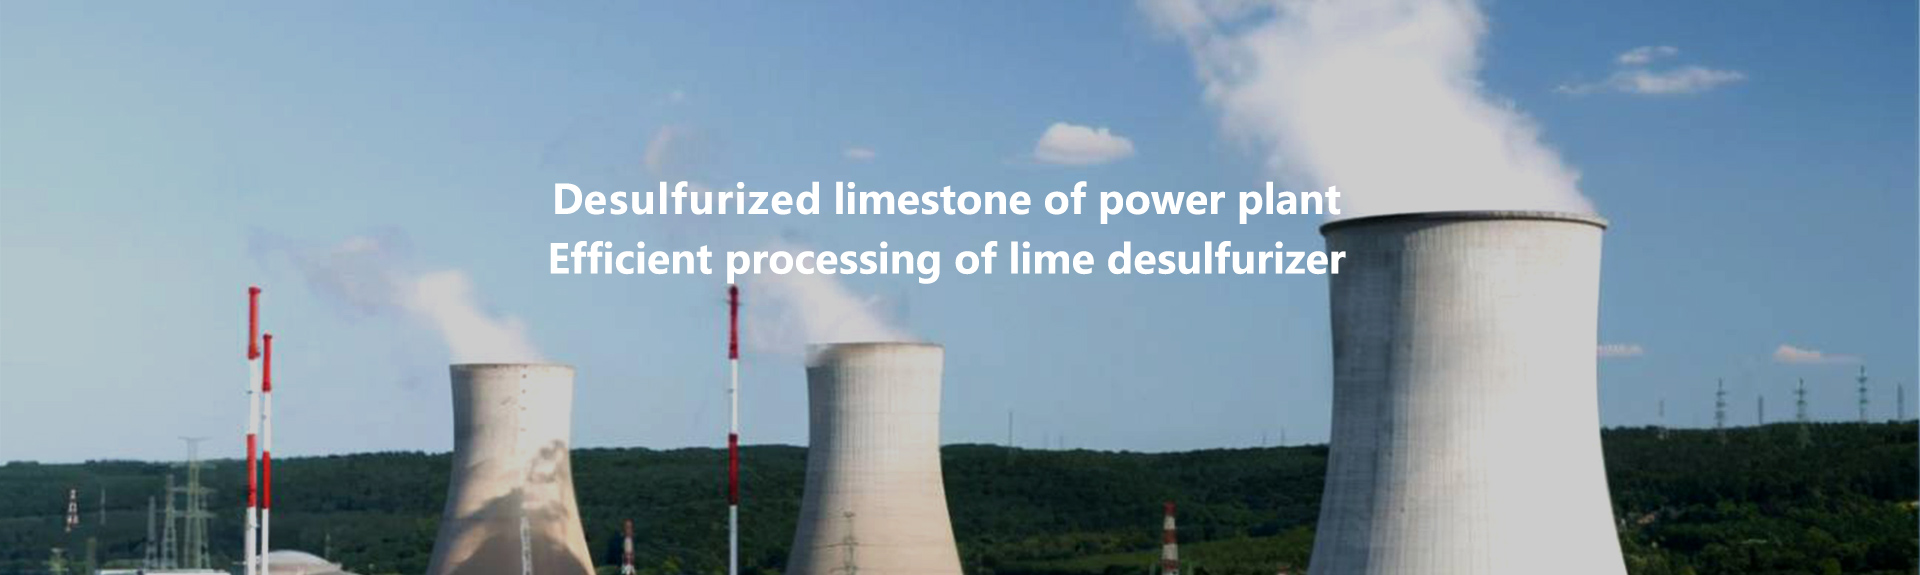 Power plant desulfurization